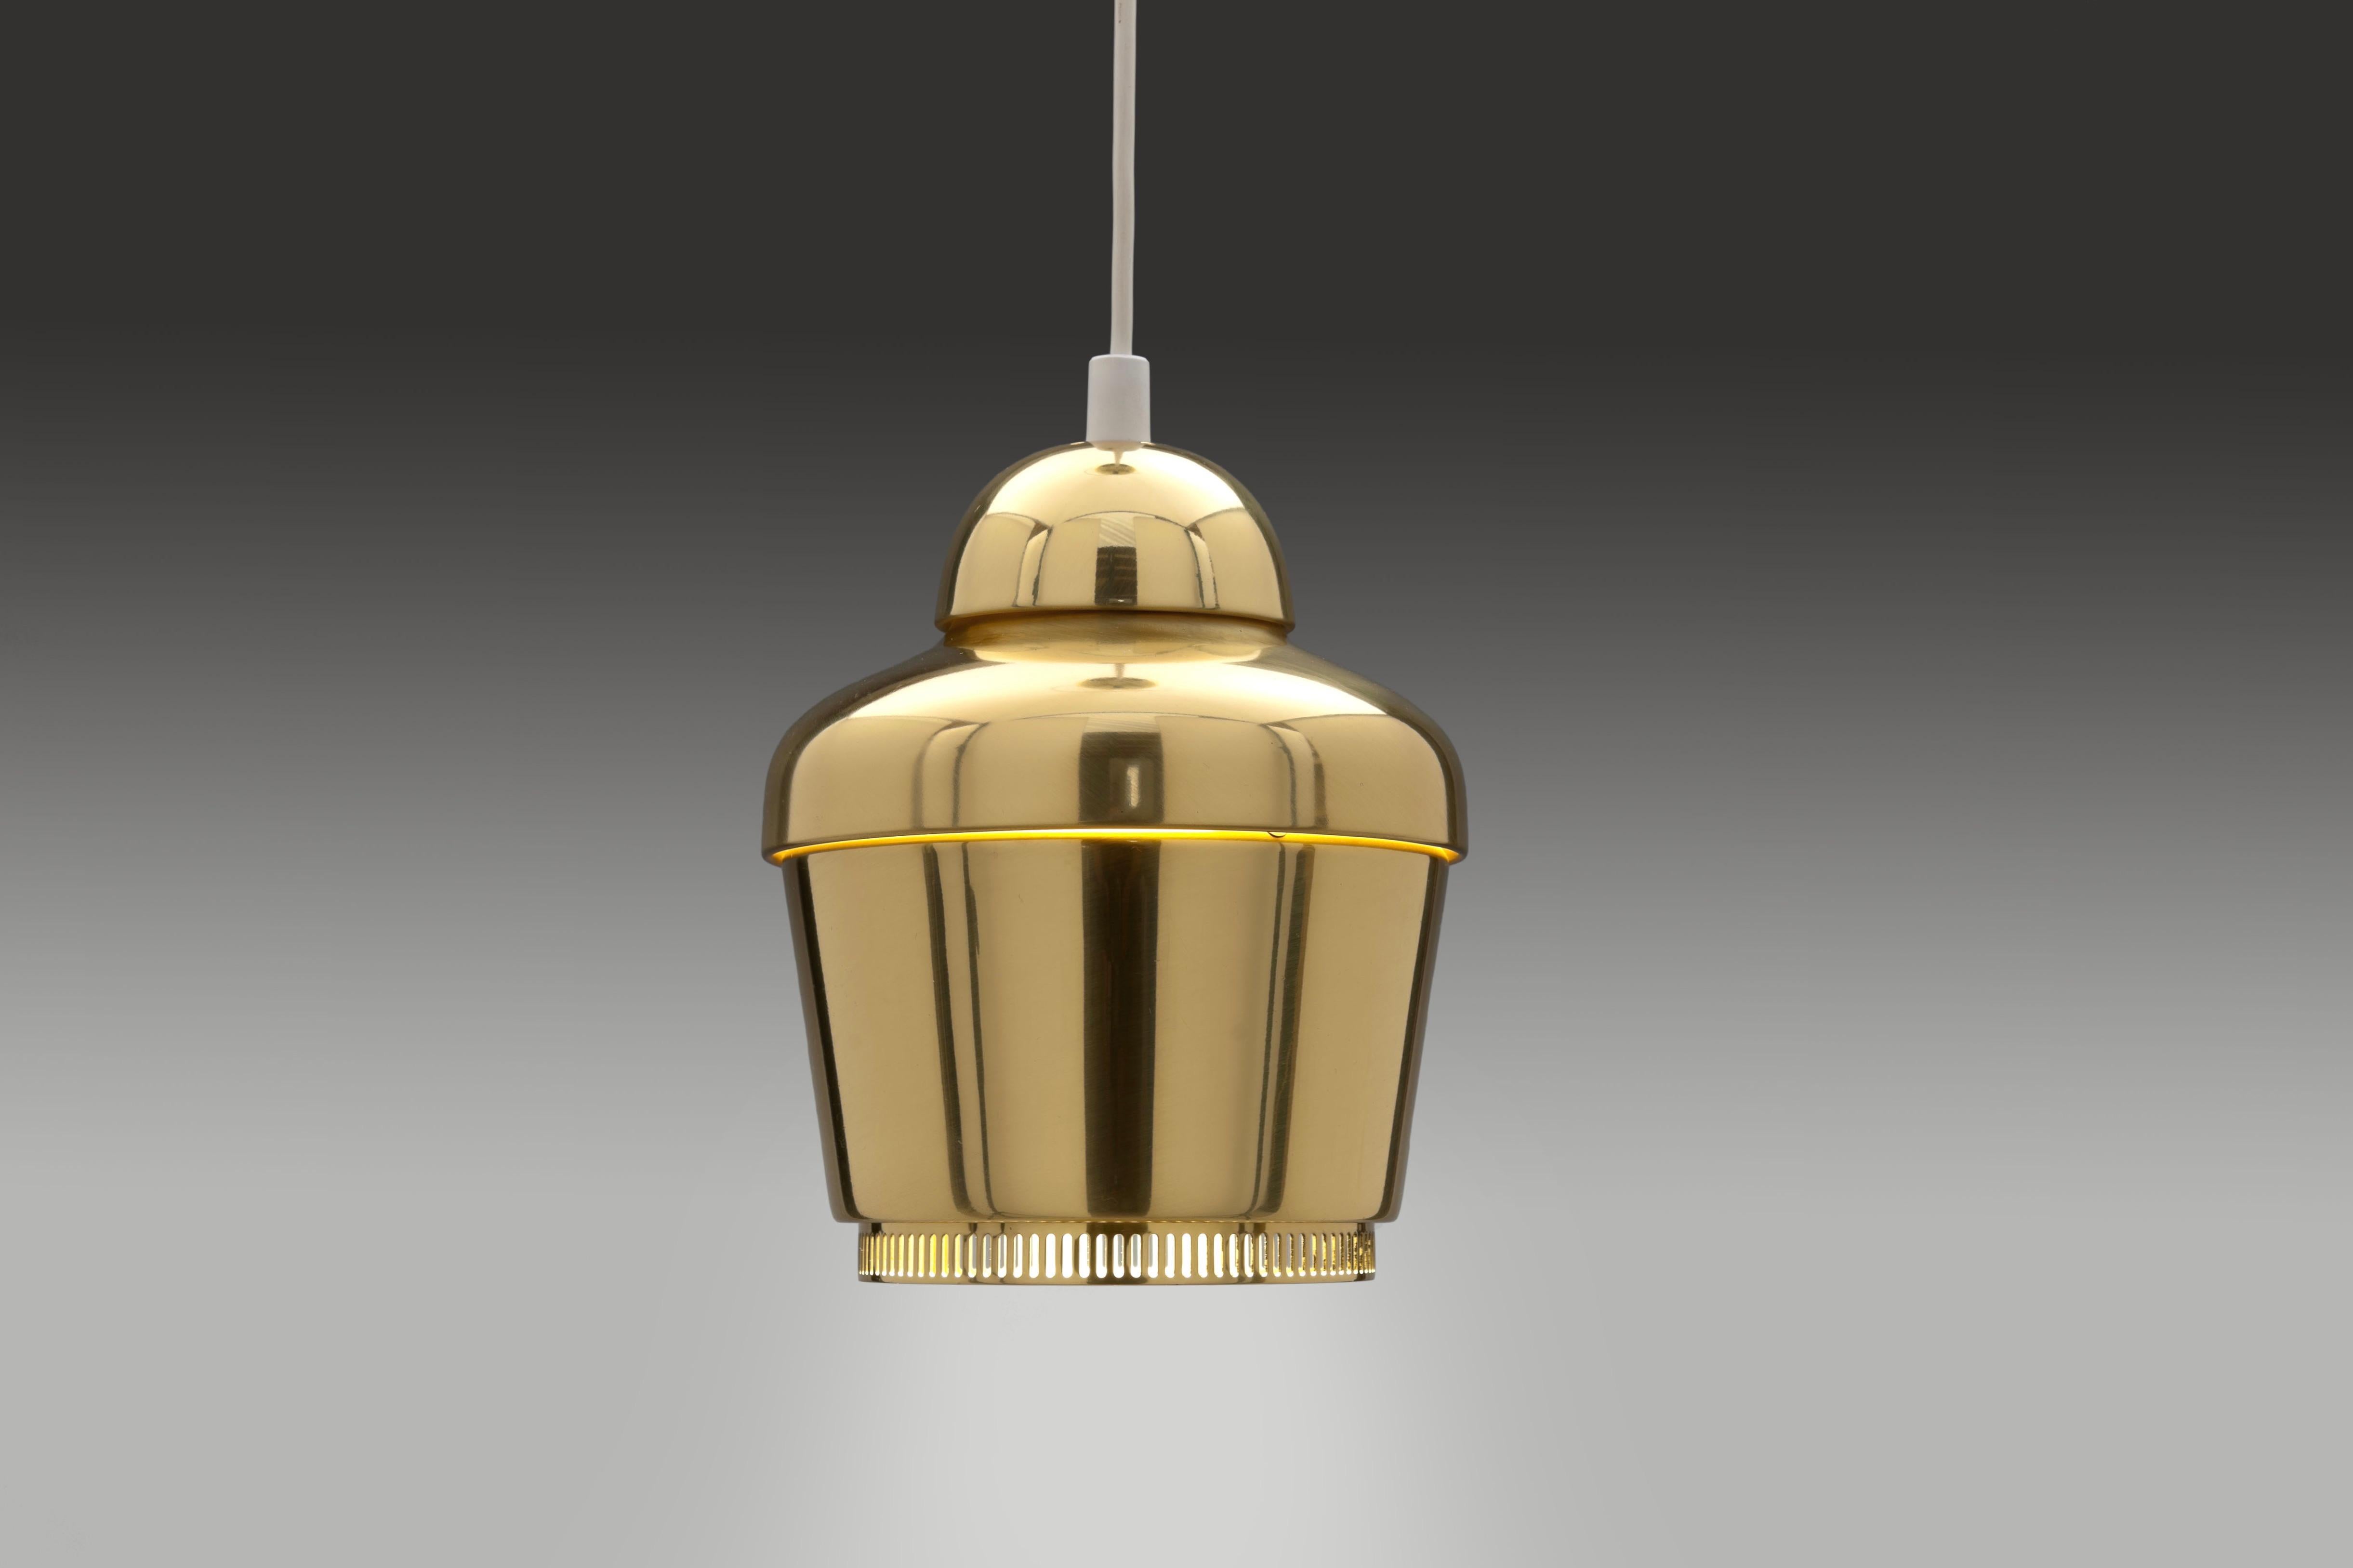 Brass 'Kultakello' Model A 330 'Golden Bell' Pendant by Alvar Aalto For Sale 1